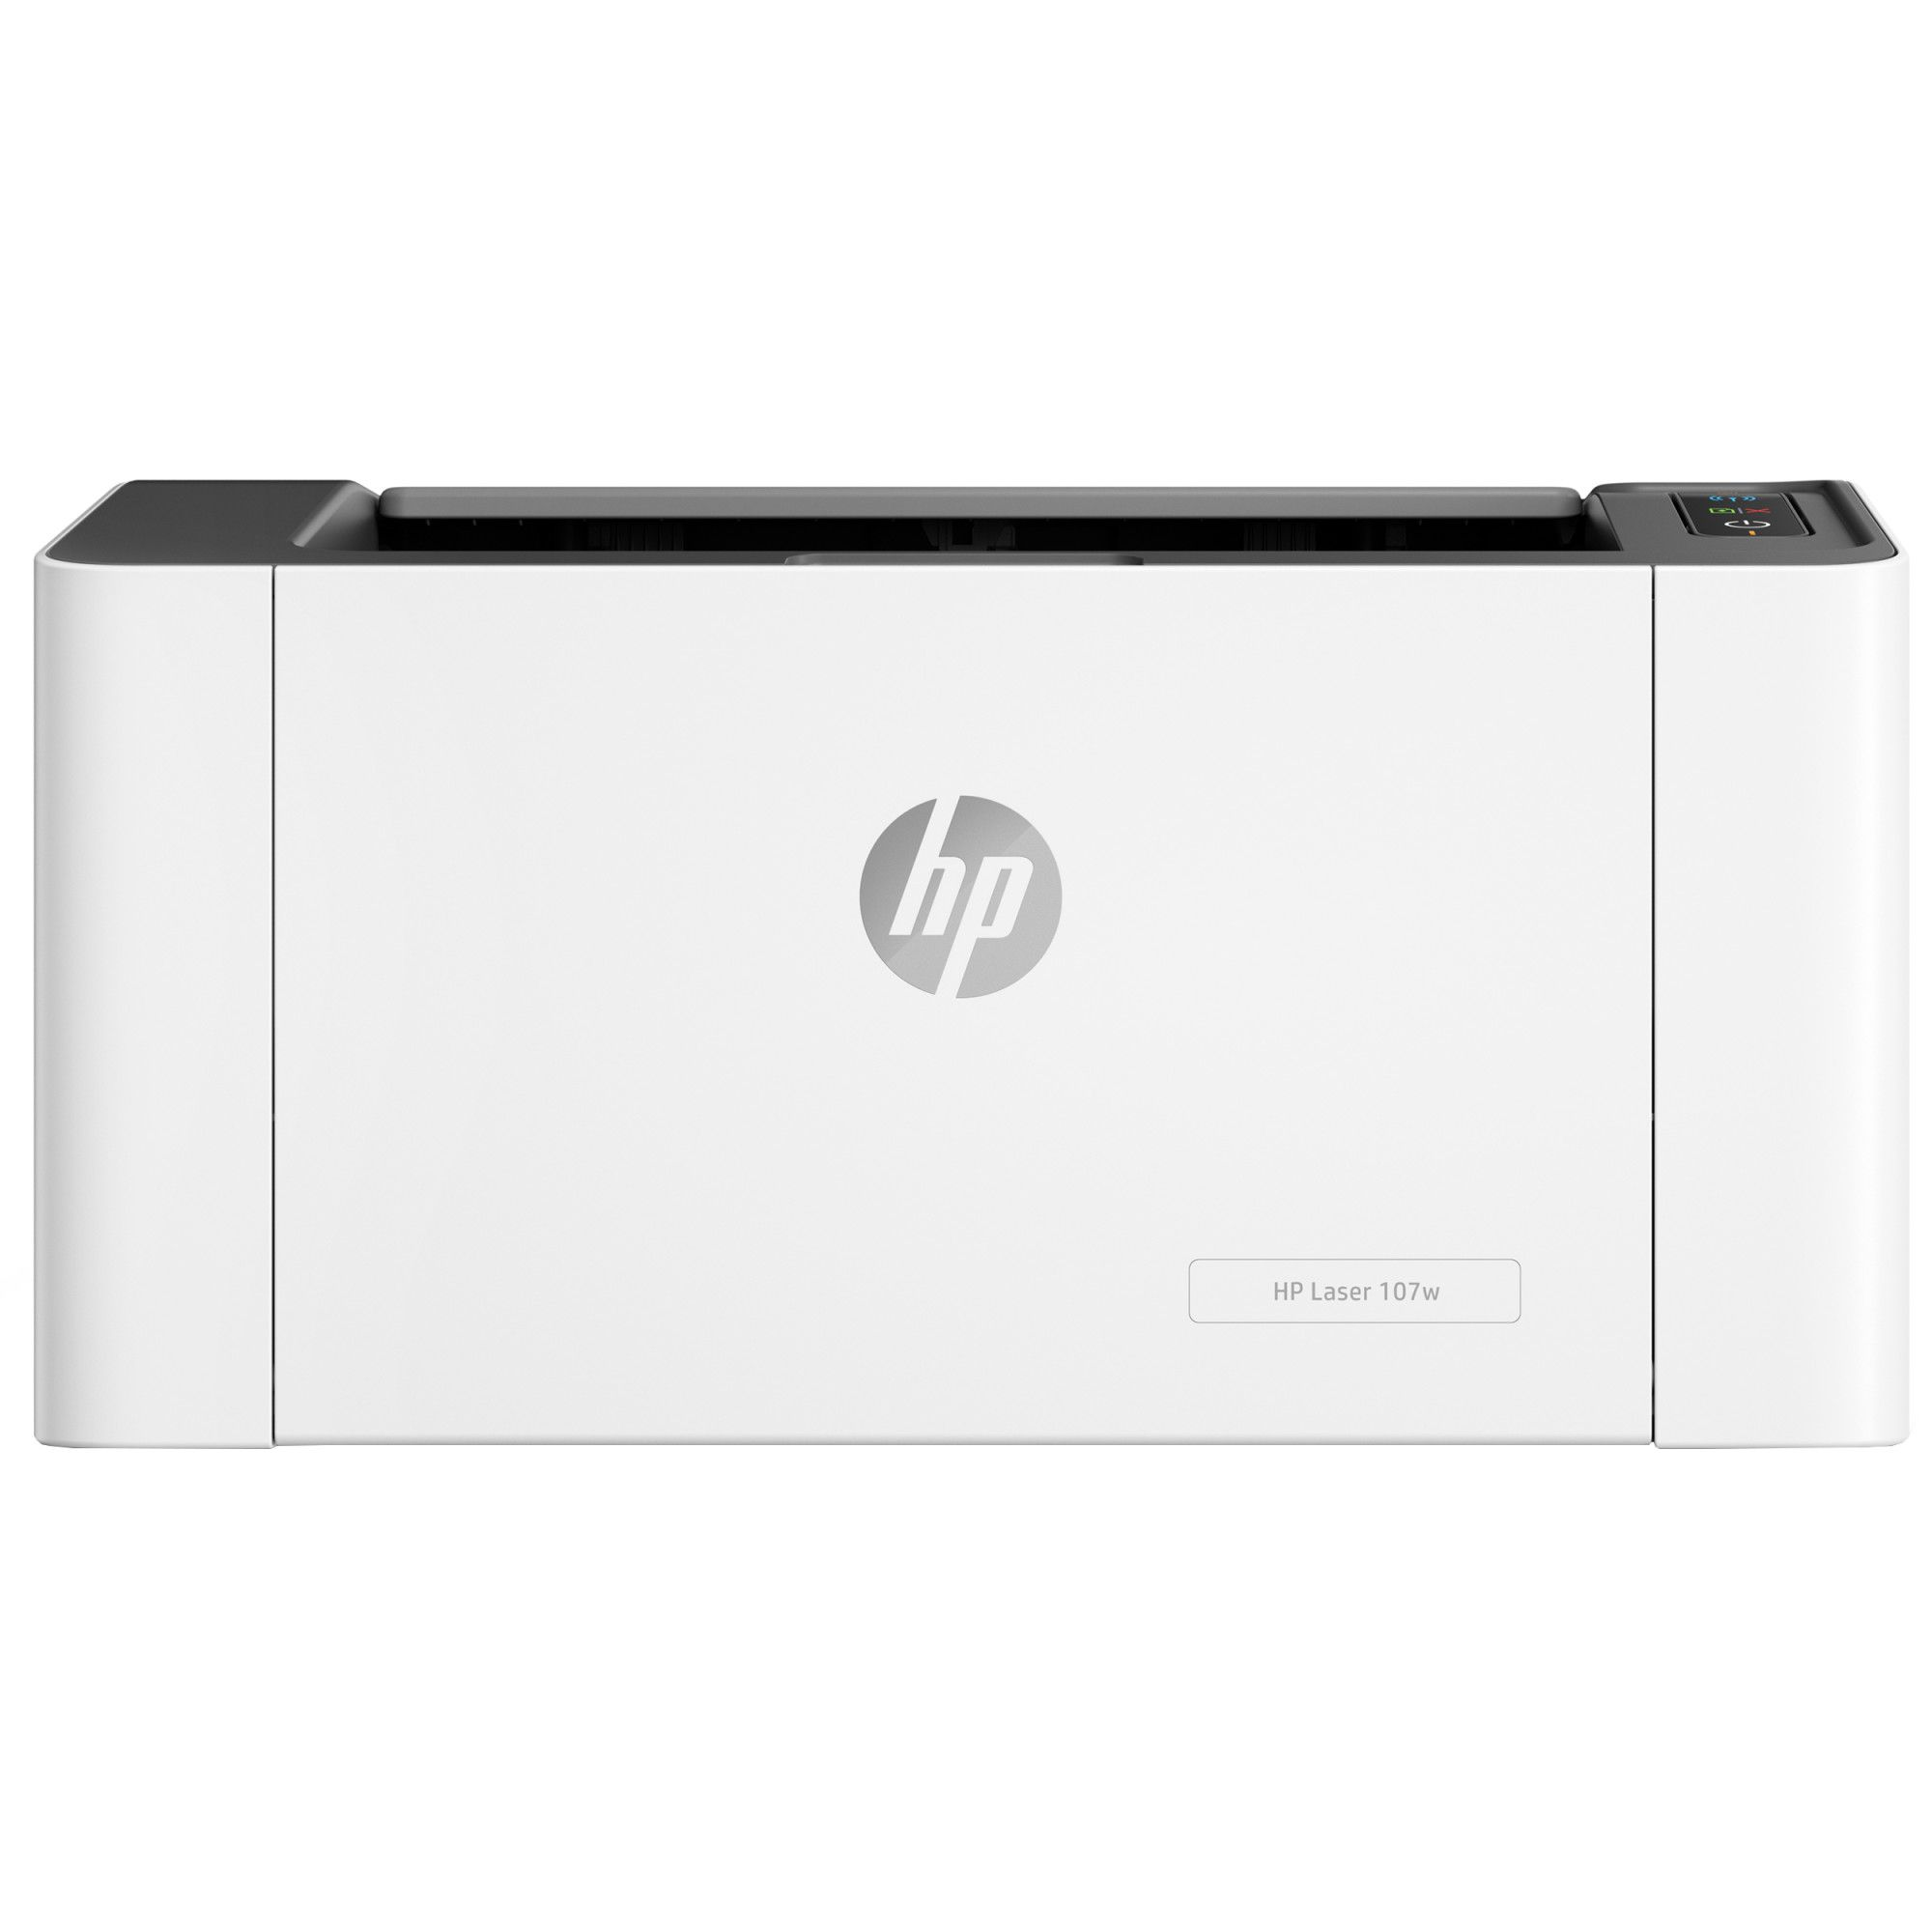 HP Laser 107W Monochrome Printer